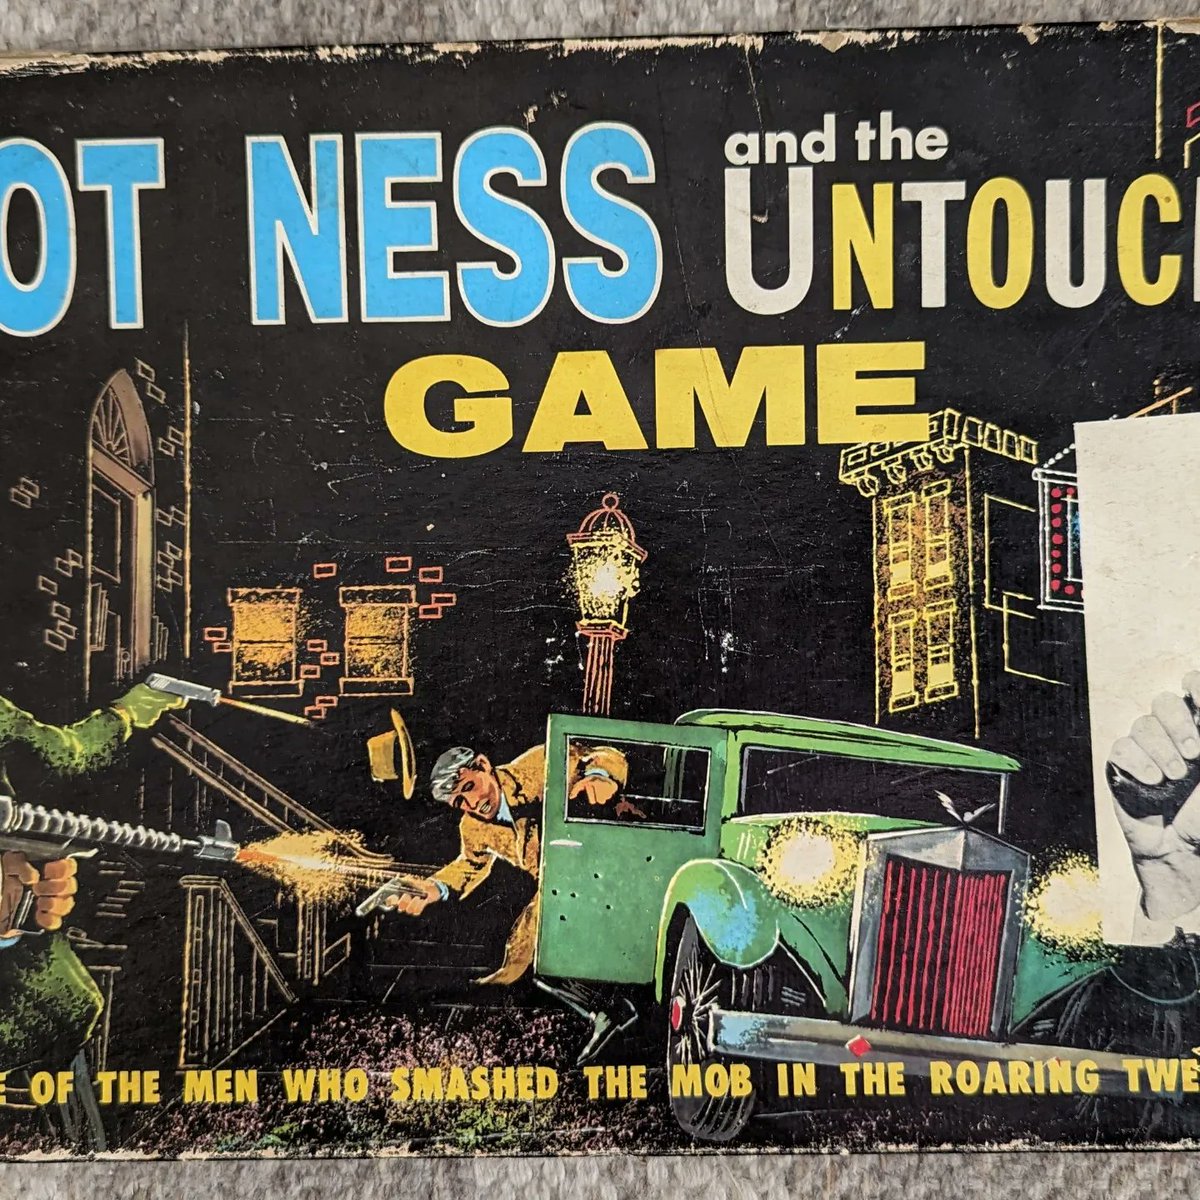 Family game night was better in the 60s!  #untouchables #boardgames #vintagegames #vintagetv #oldgames #oldtoys